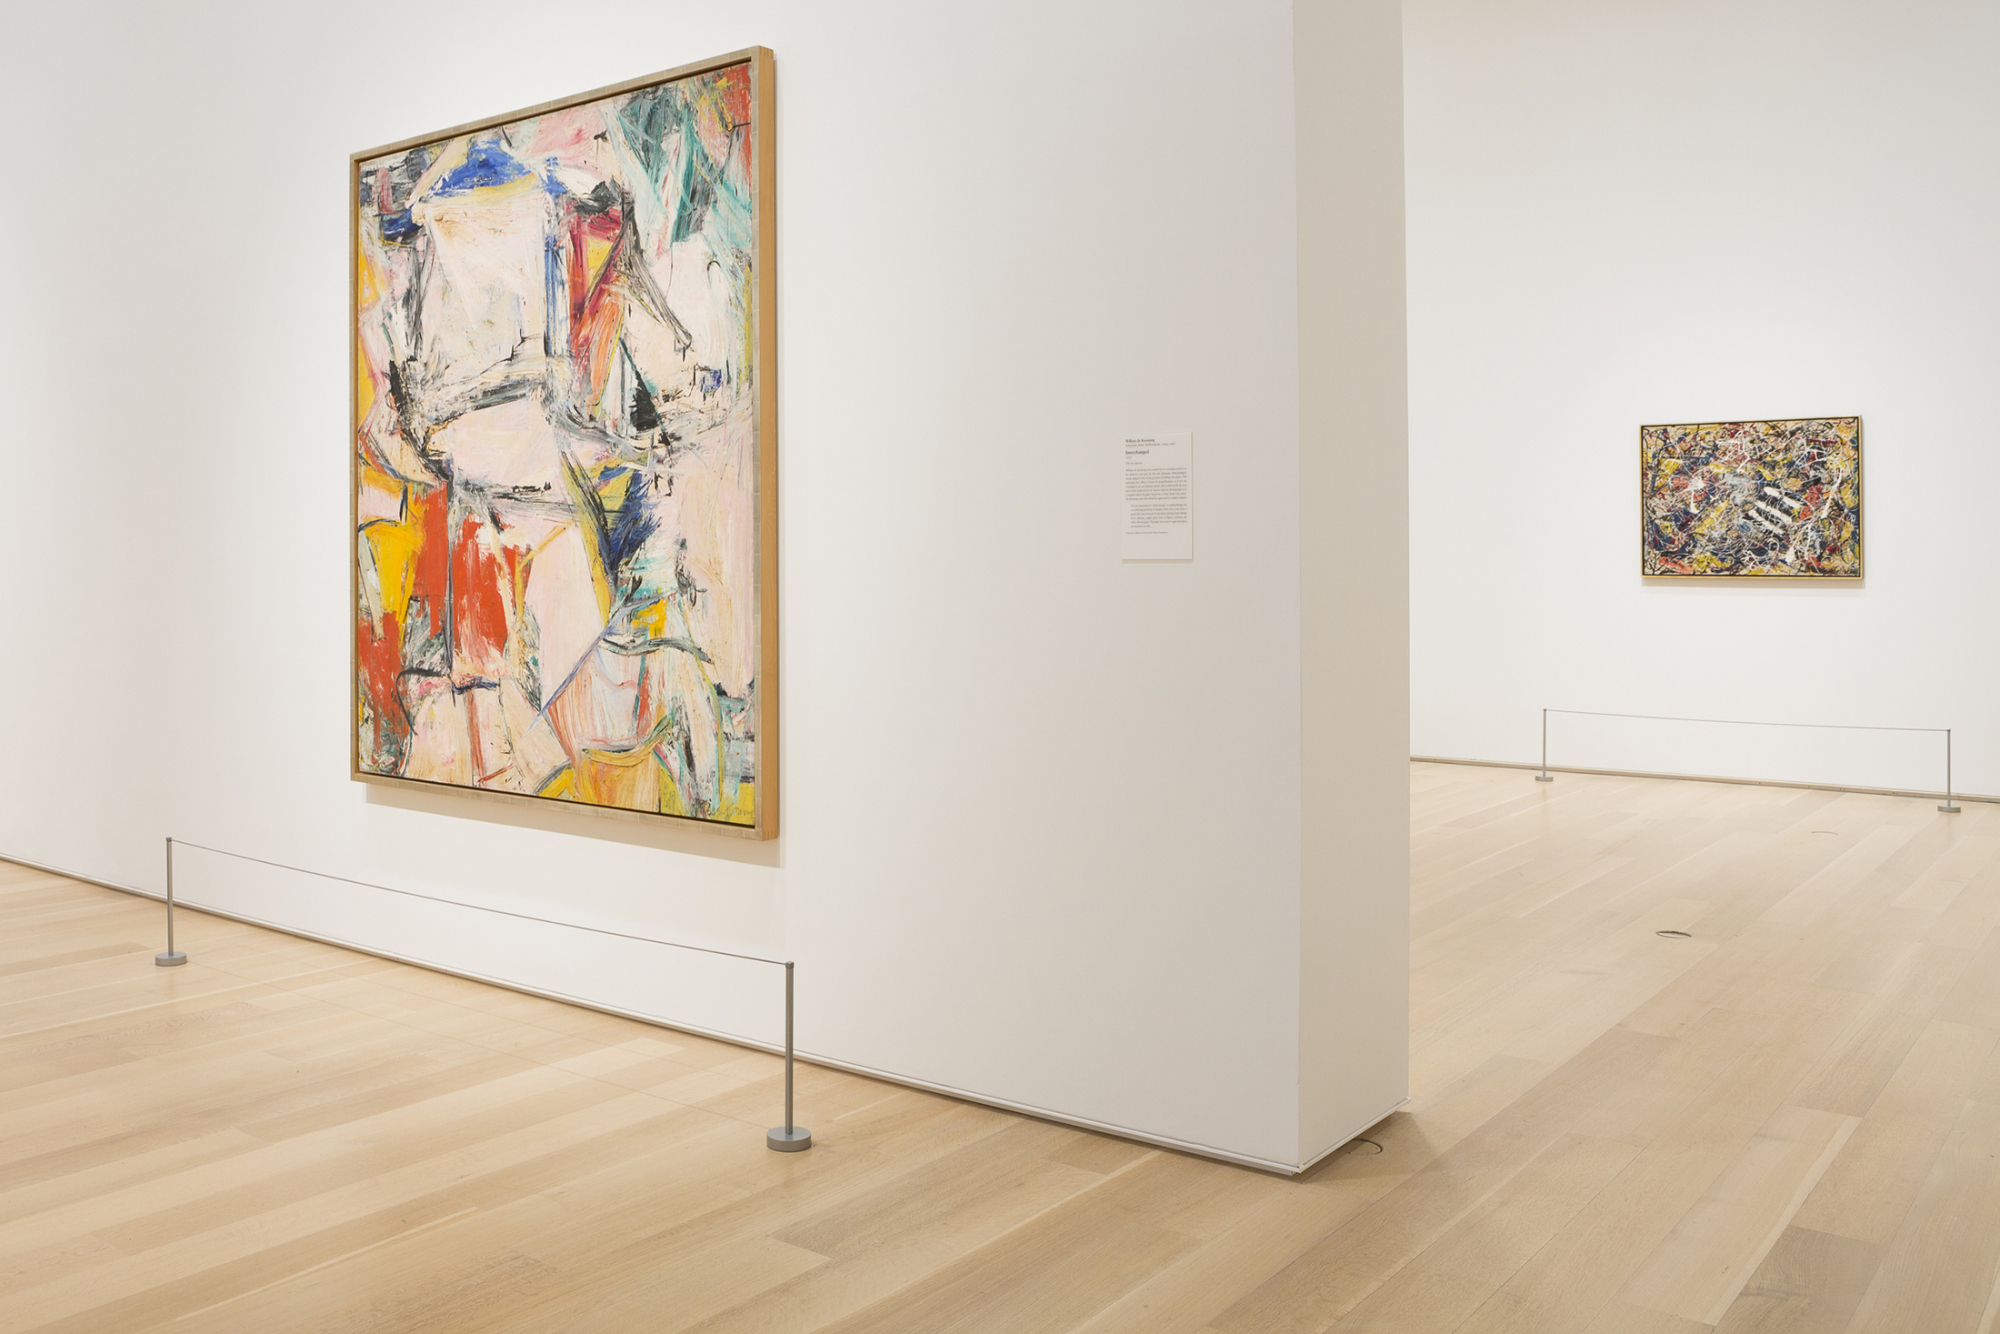 The Willem de Kooning and Jackson Pollock.
